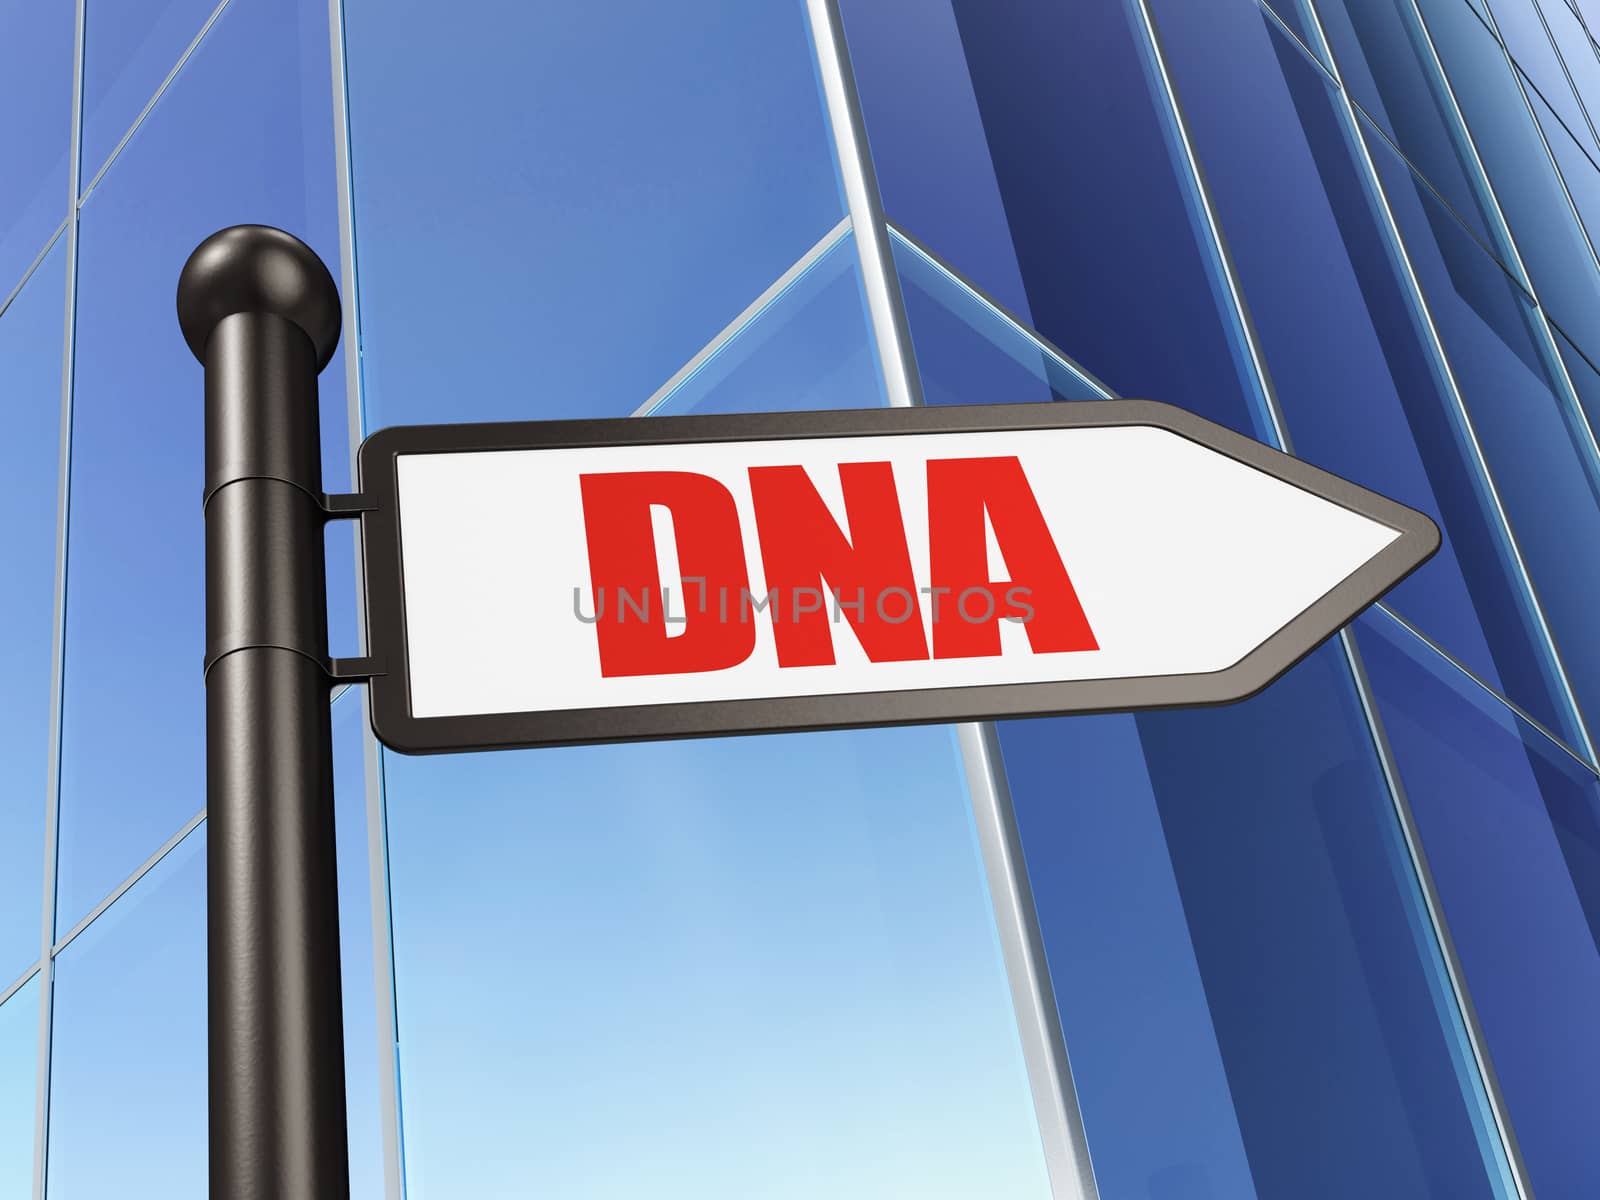 Healthcare concept: sign DNA on Building background, 3D rendering